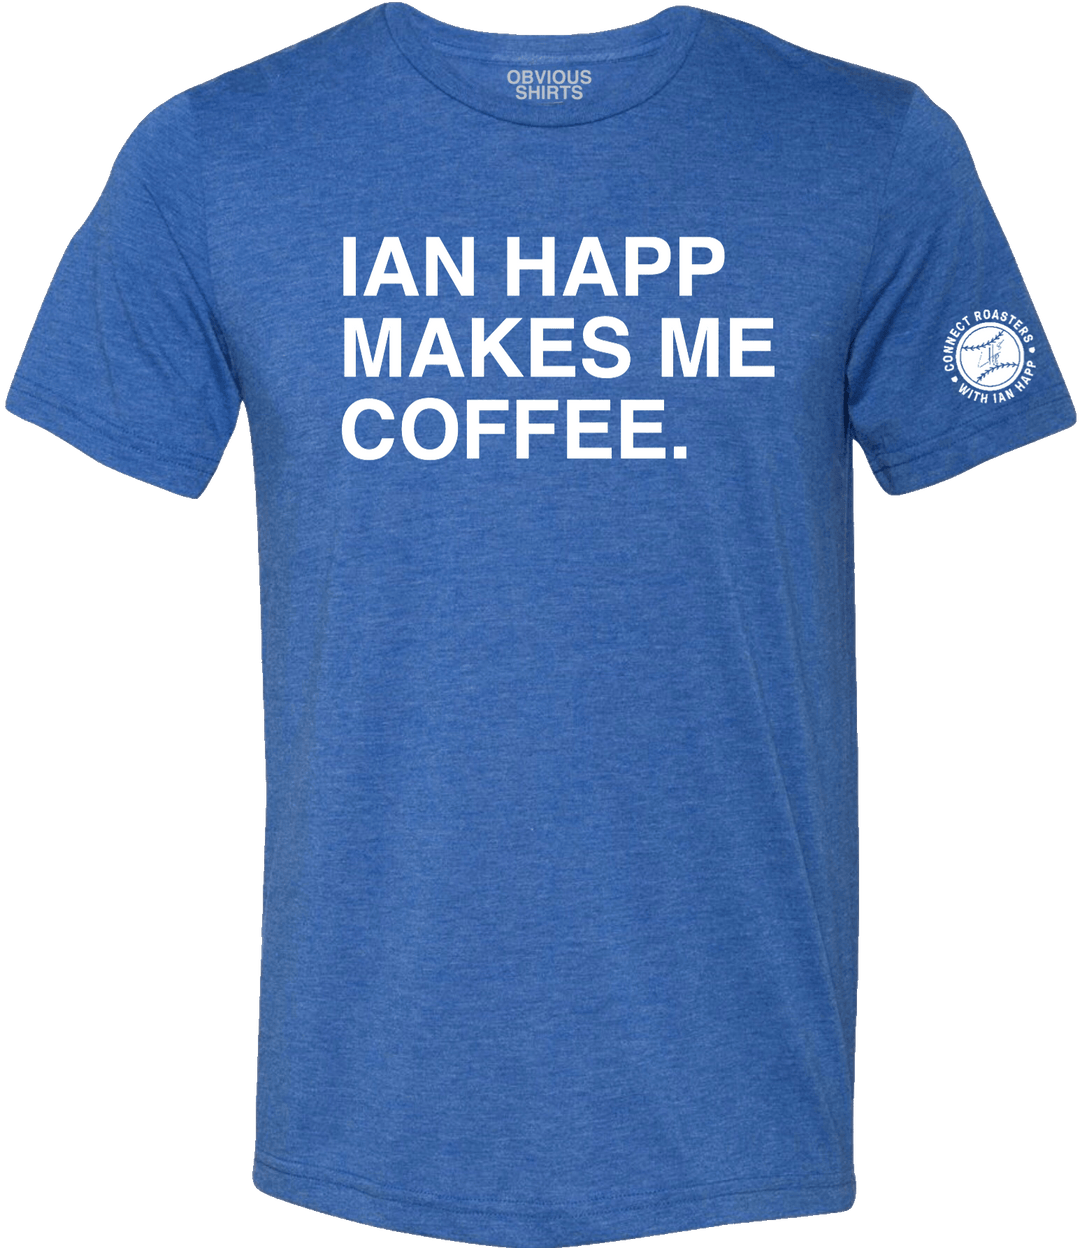 IAN HAPP MAKES ME COFFEE.